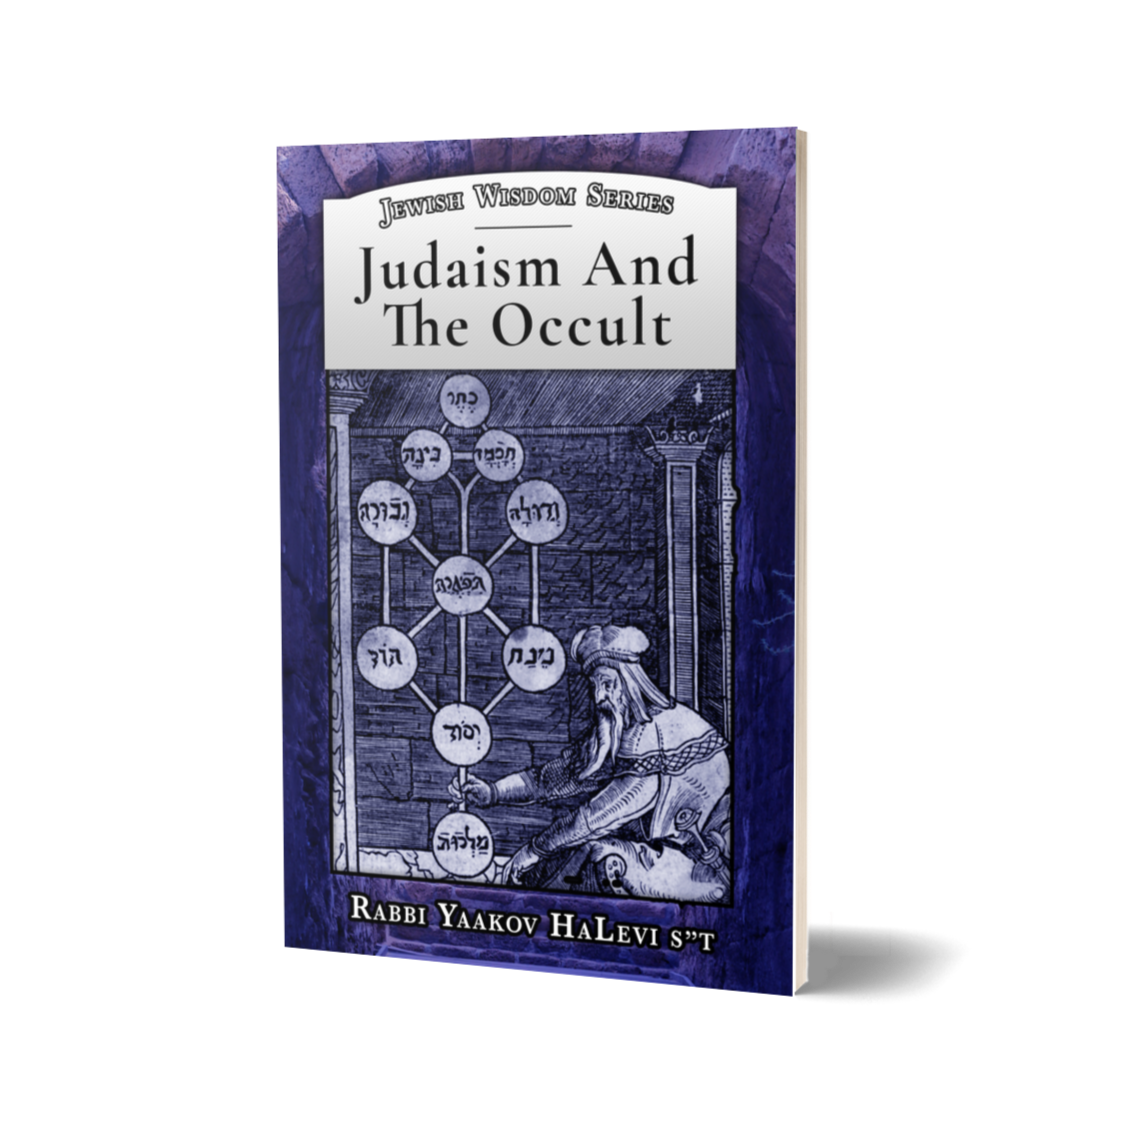 Judaism And The Occult (Jewish Wisdom Series)